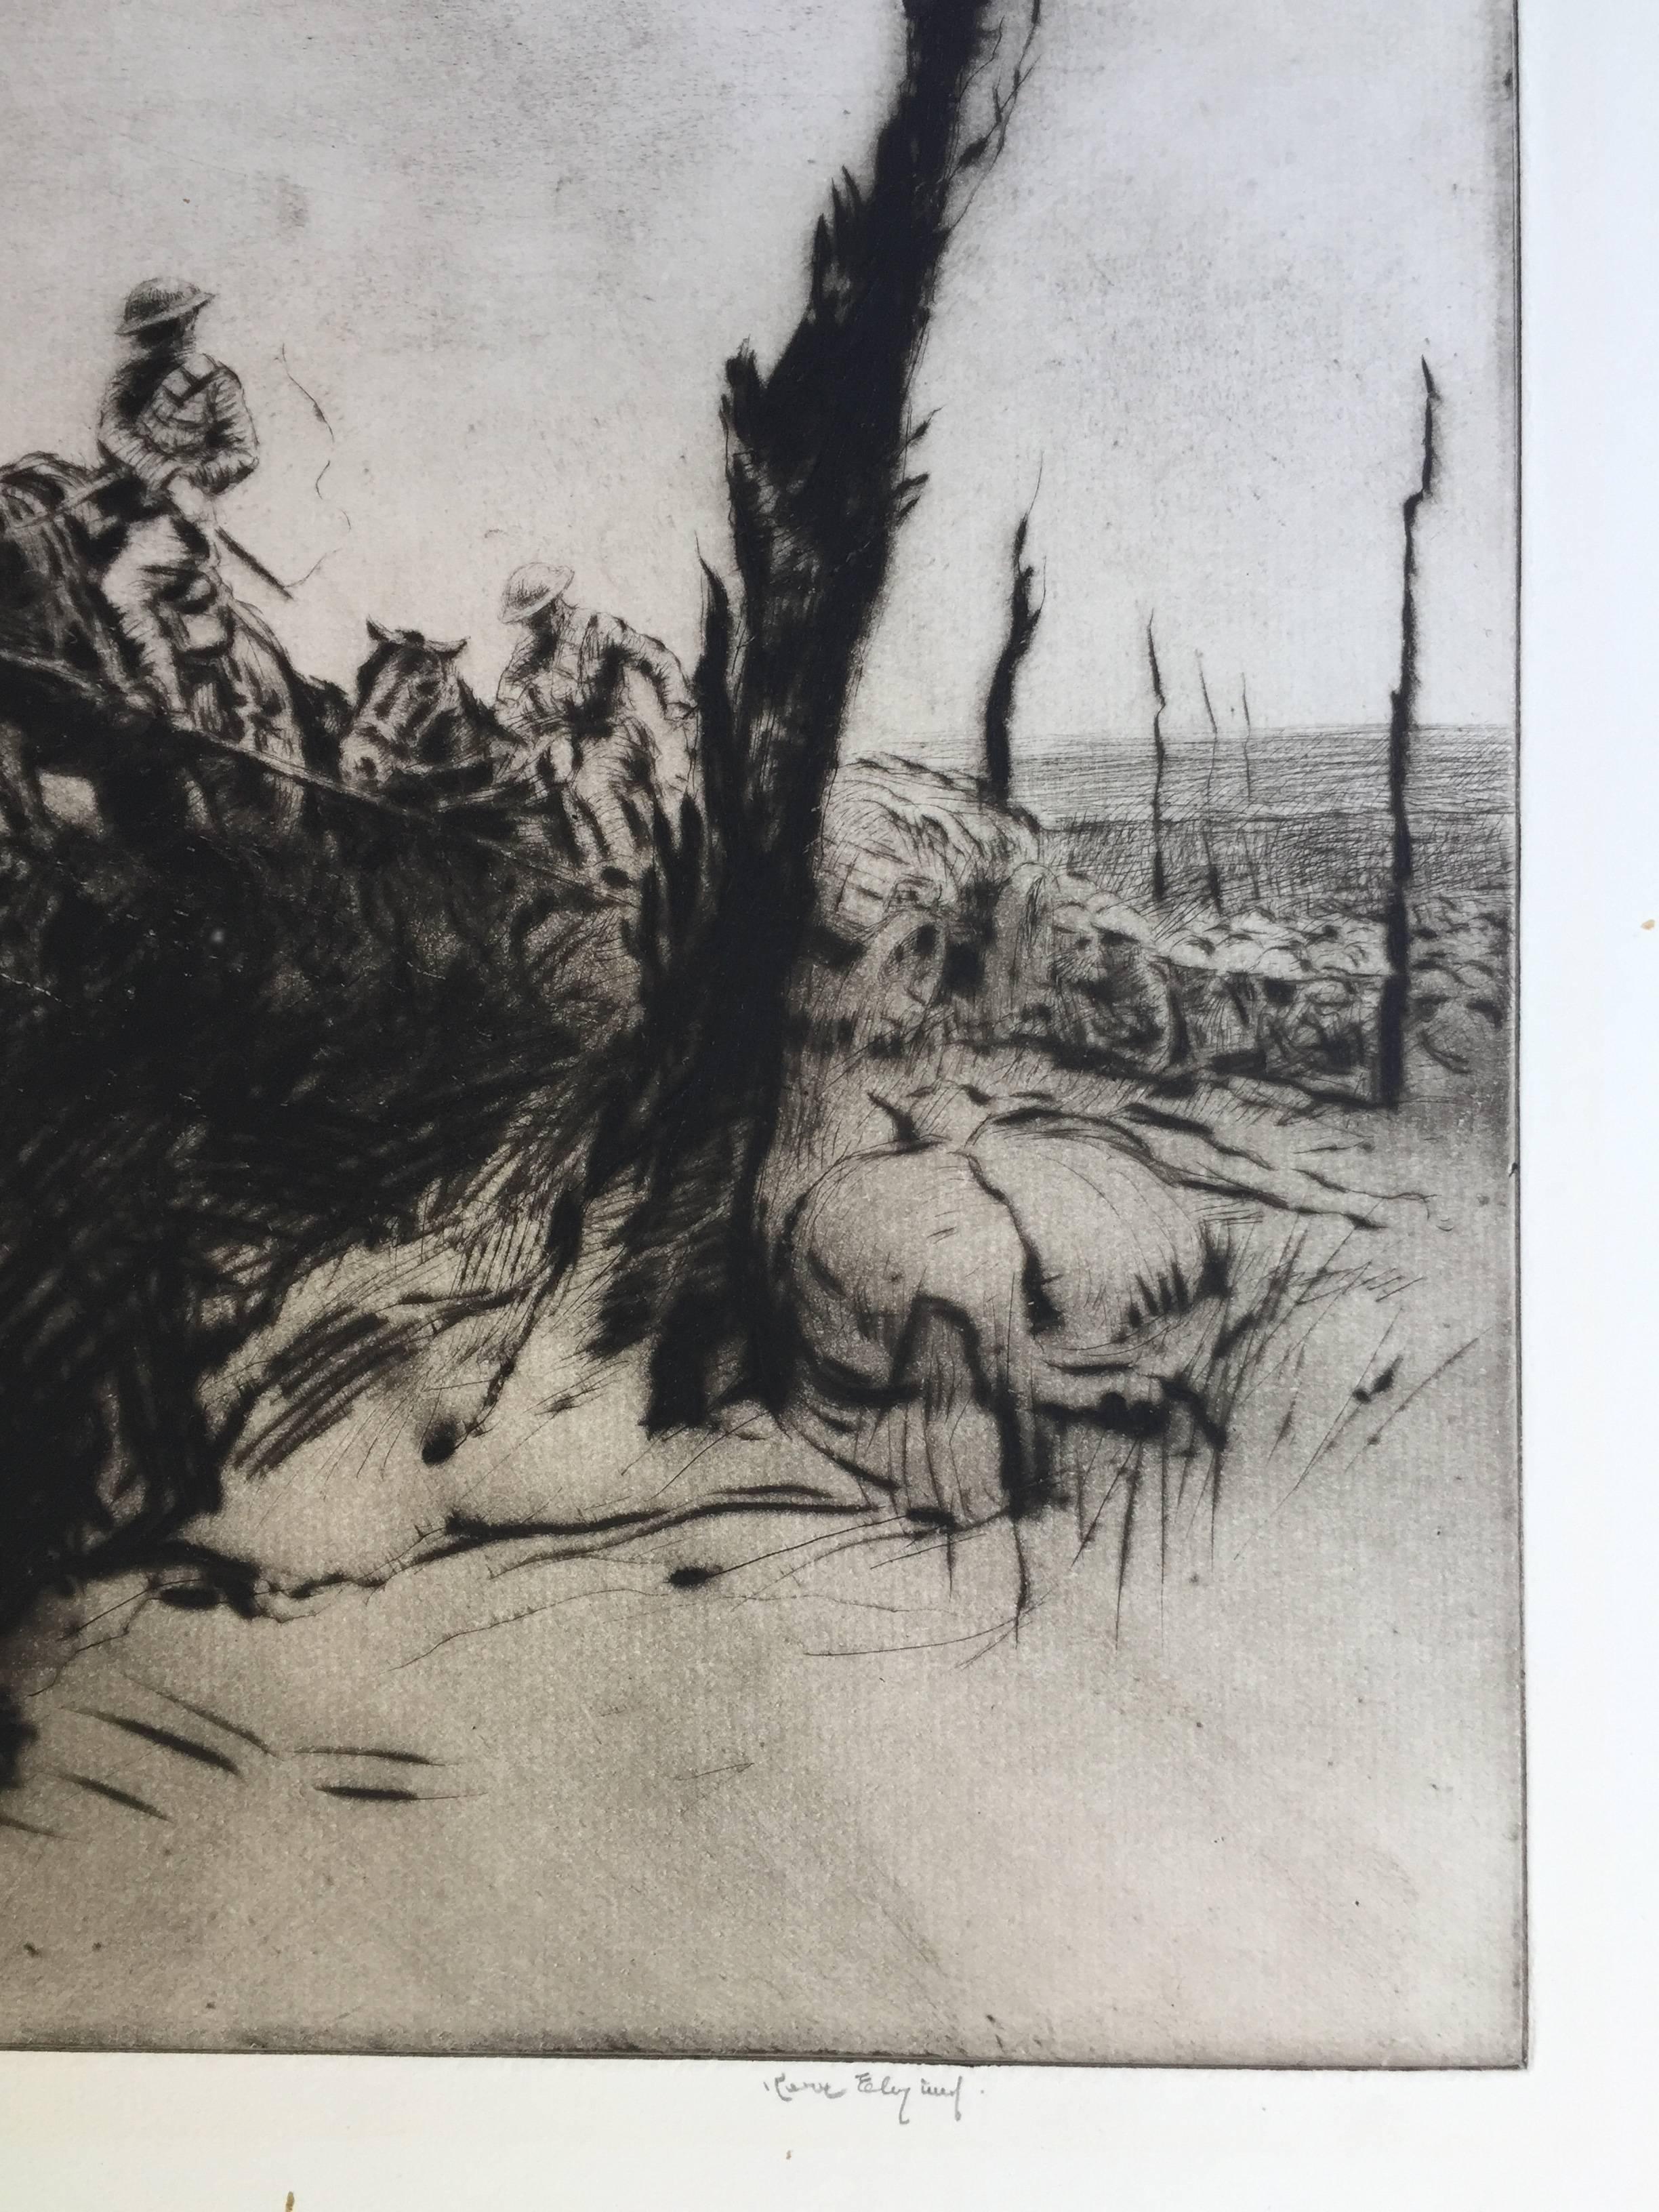 ROUGH GOING - (WORLD WAR 1) - Gray Landscape Print by Kerr Eby